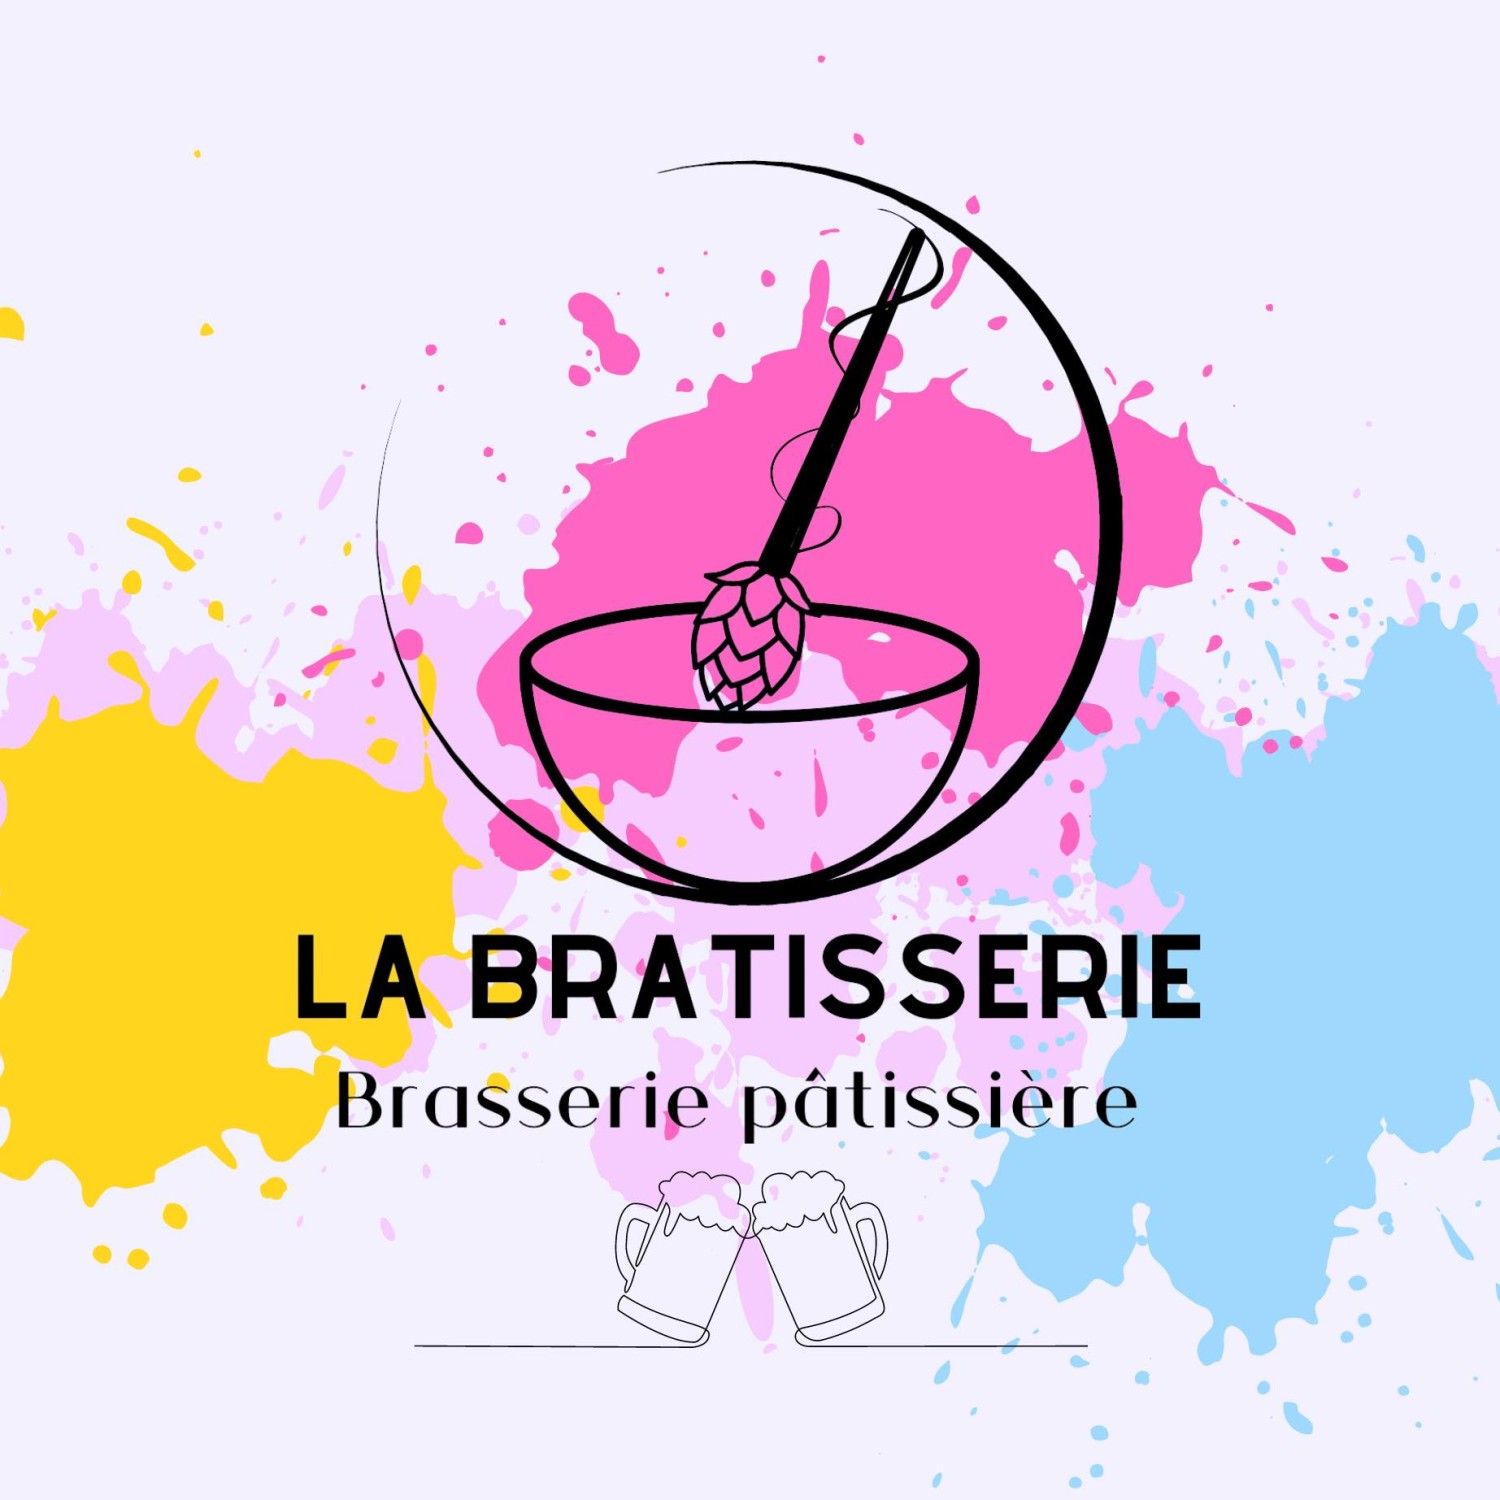 BRASSERIE LA BRATISSERIE Saint-Leu 974